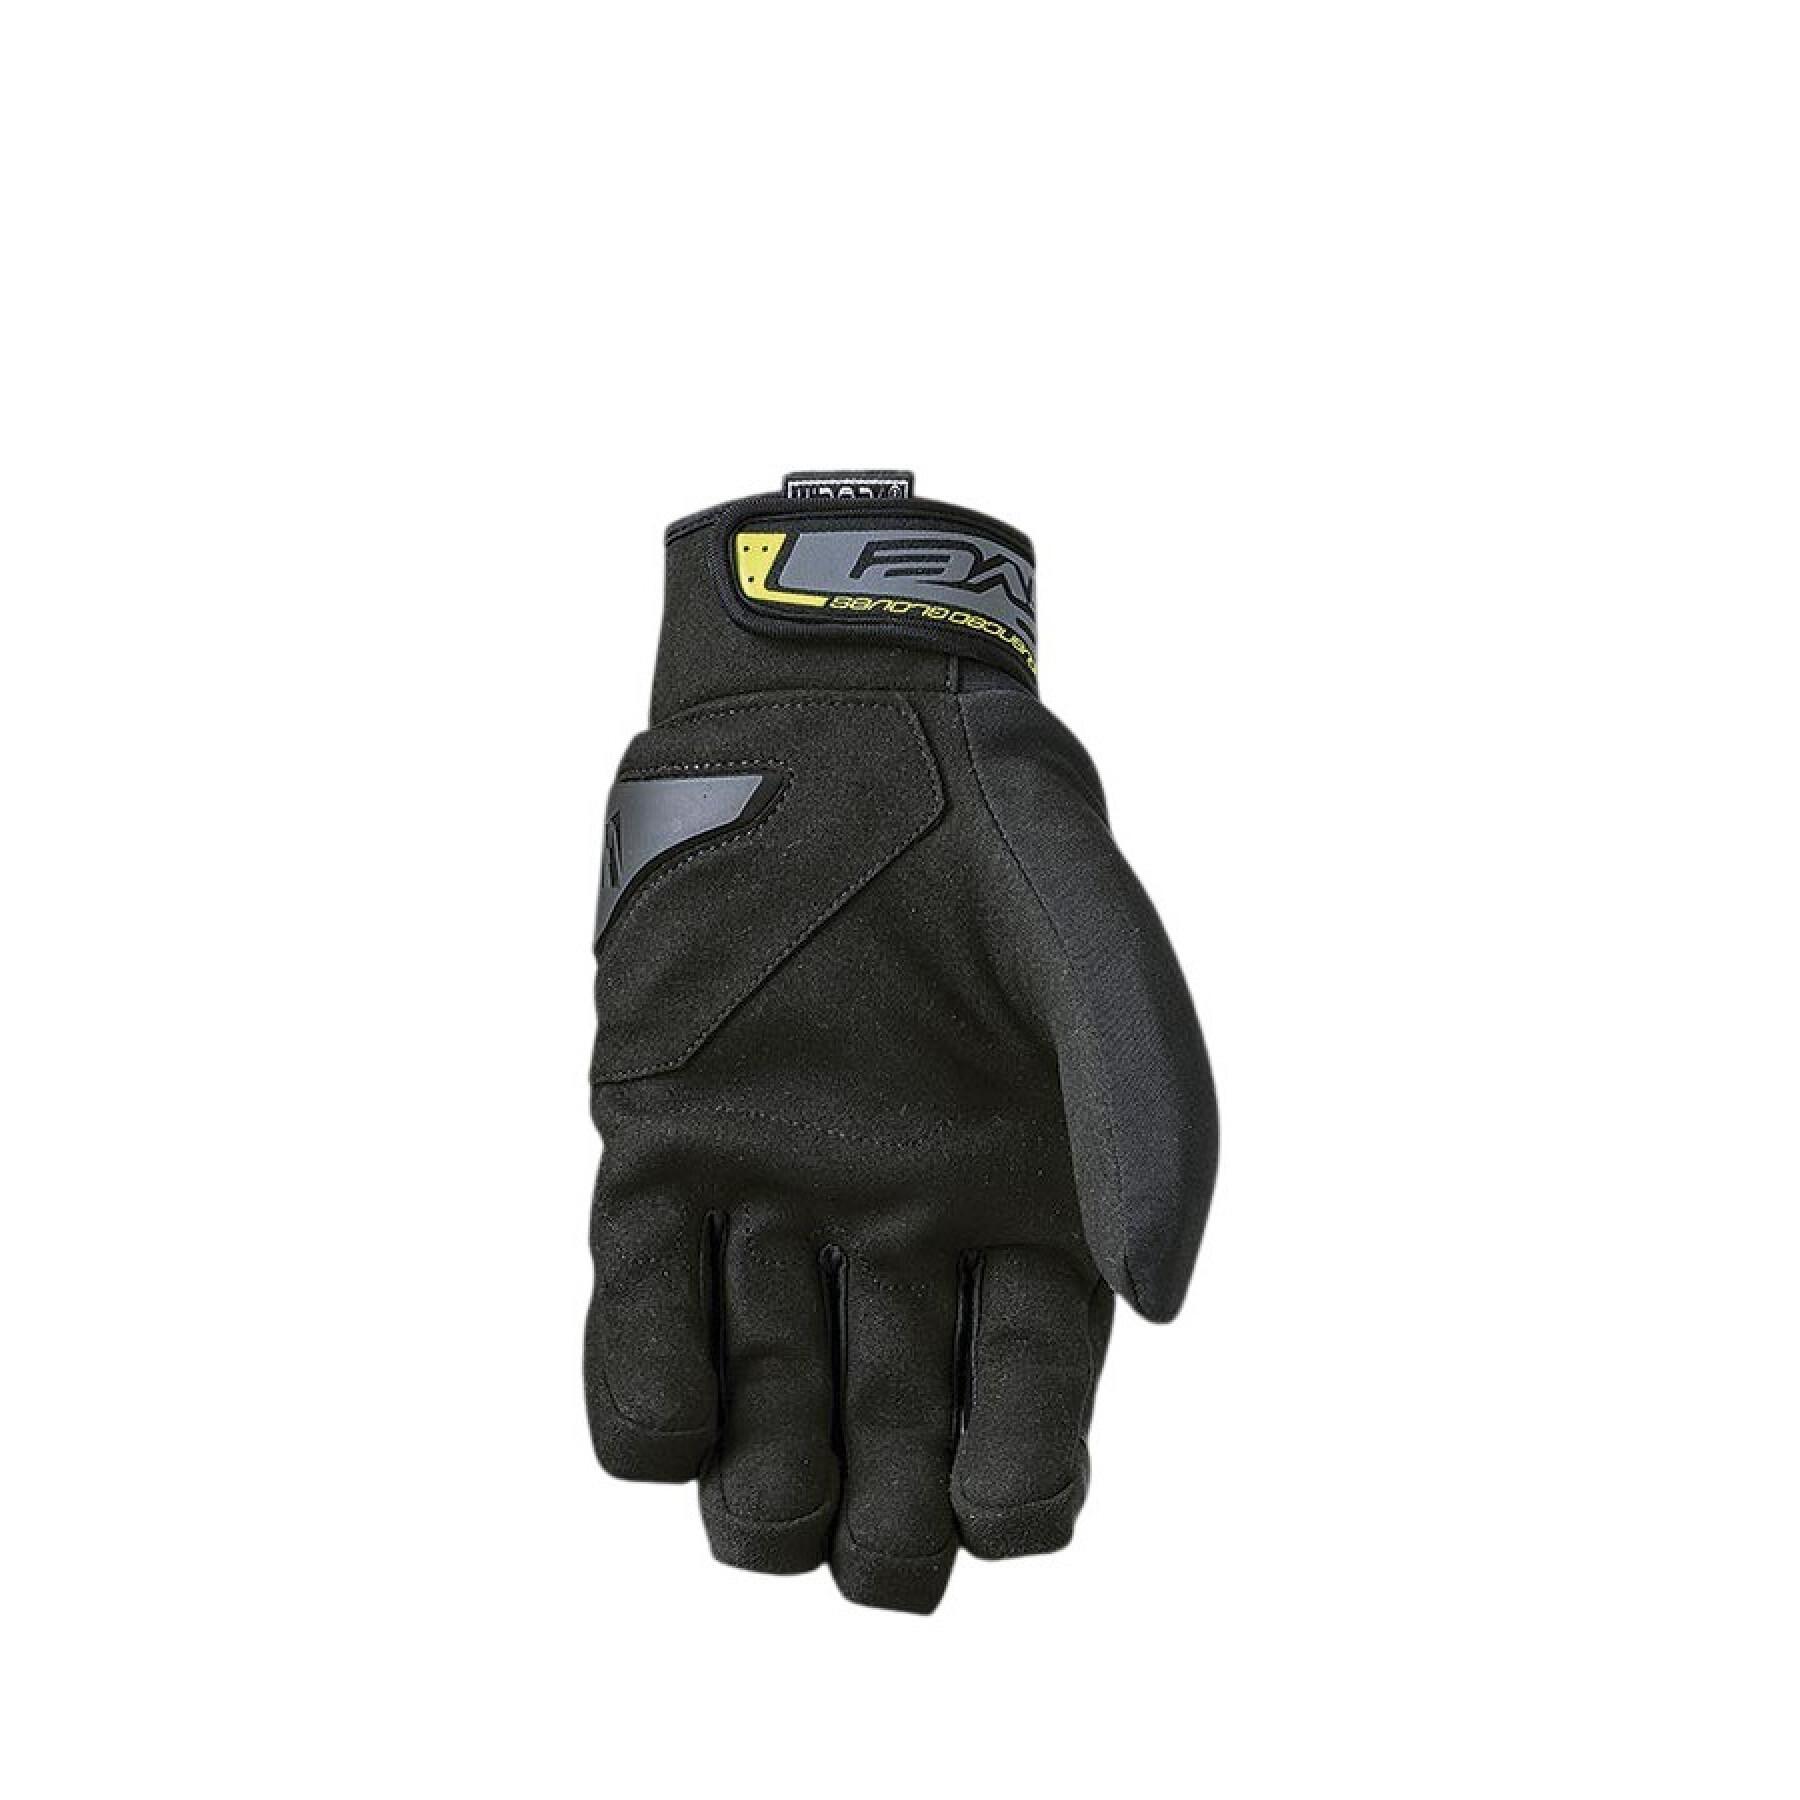 Mid-season motorcycle gloves Five rswp